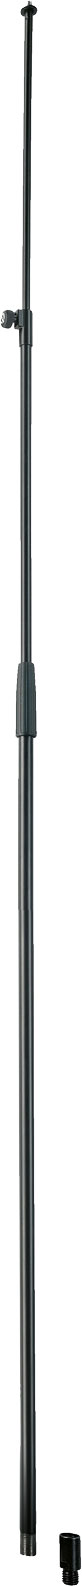 Konig-Meyer 26007  Microphone stand - Tube combination - black